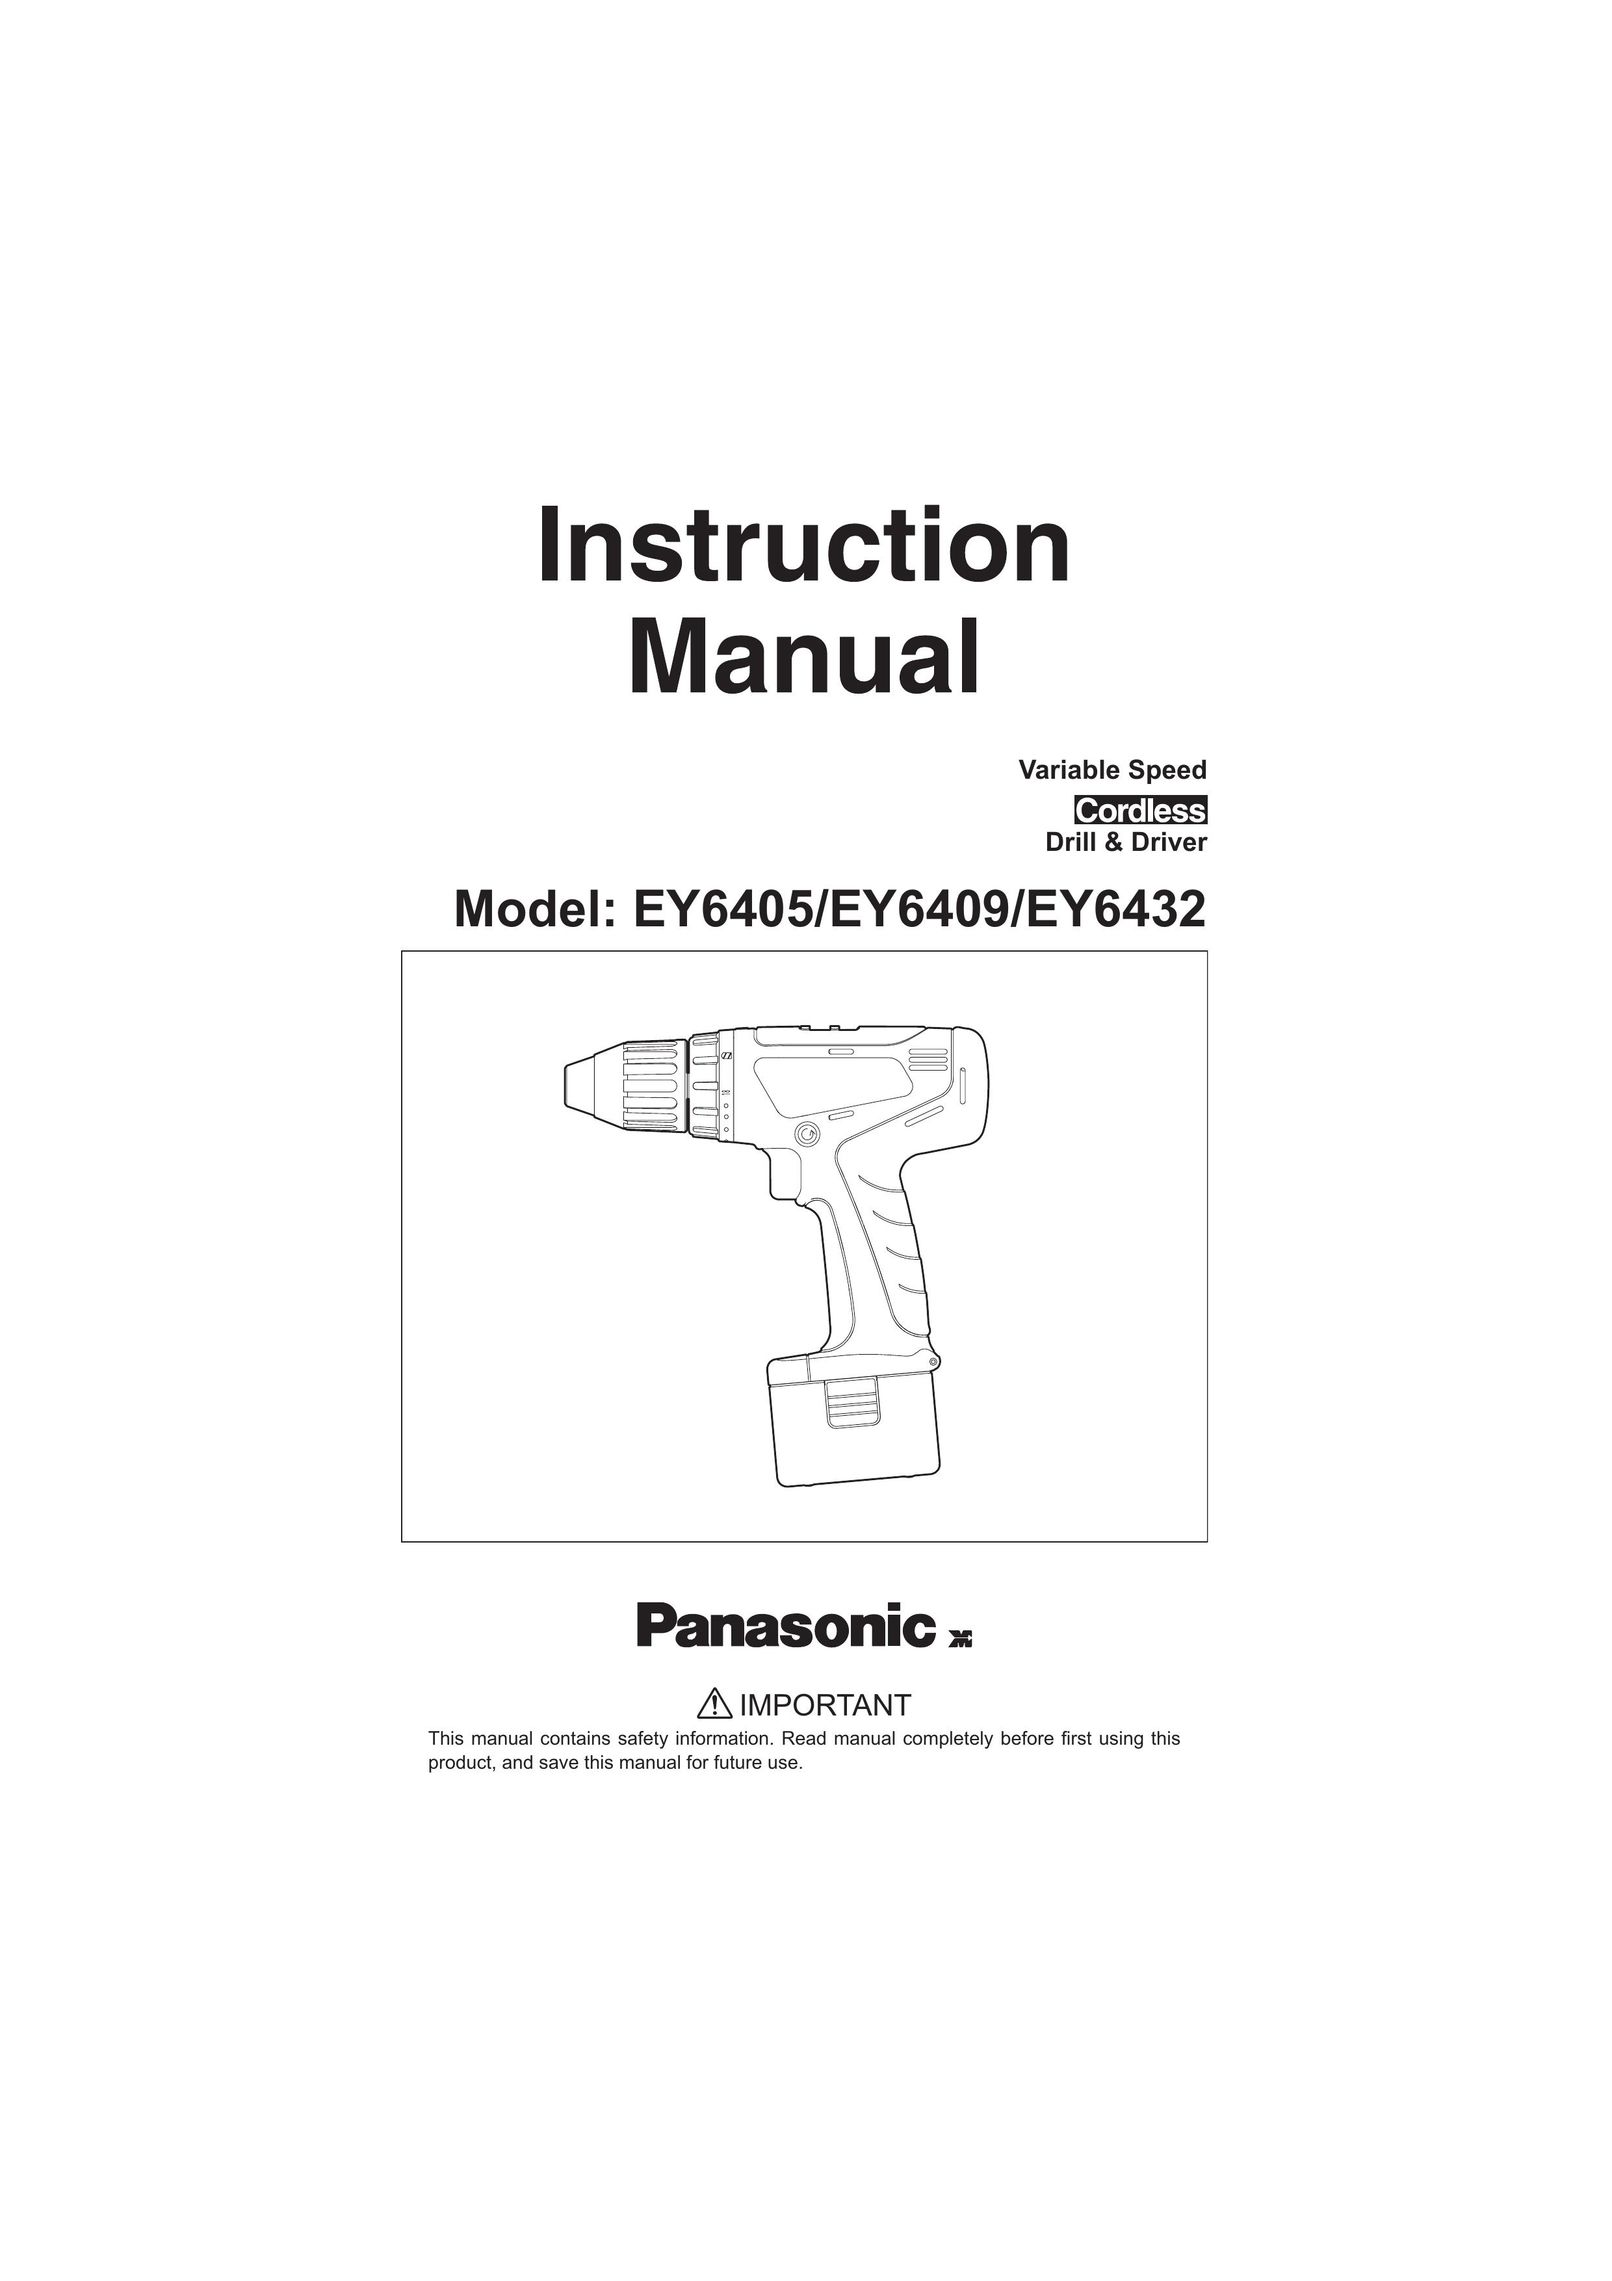 Panasonic EY6405 Cordless Drill User Manual